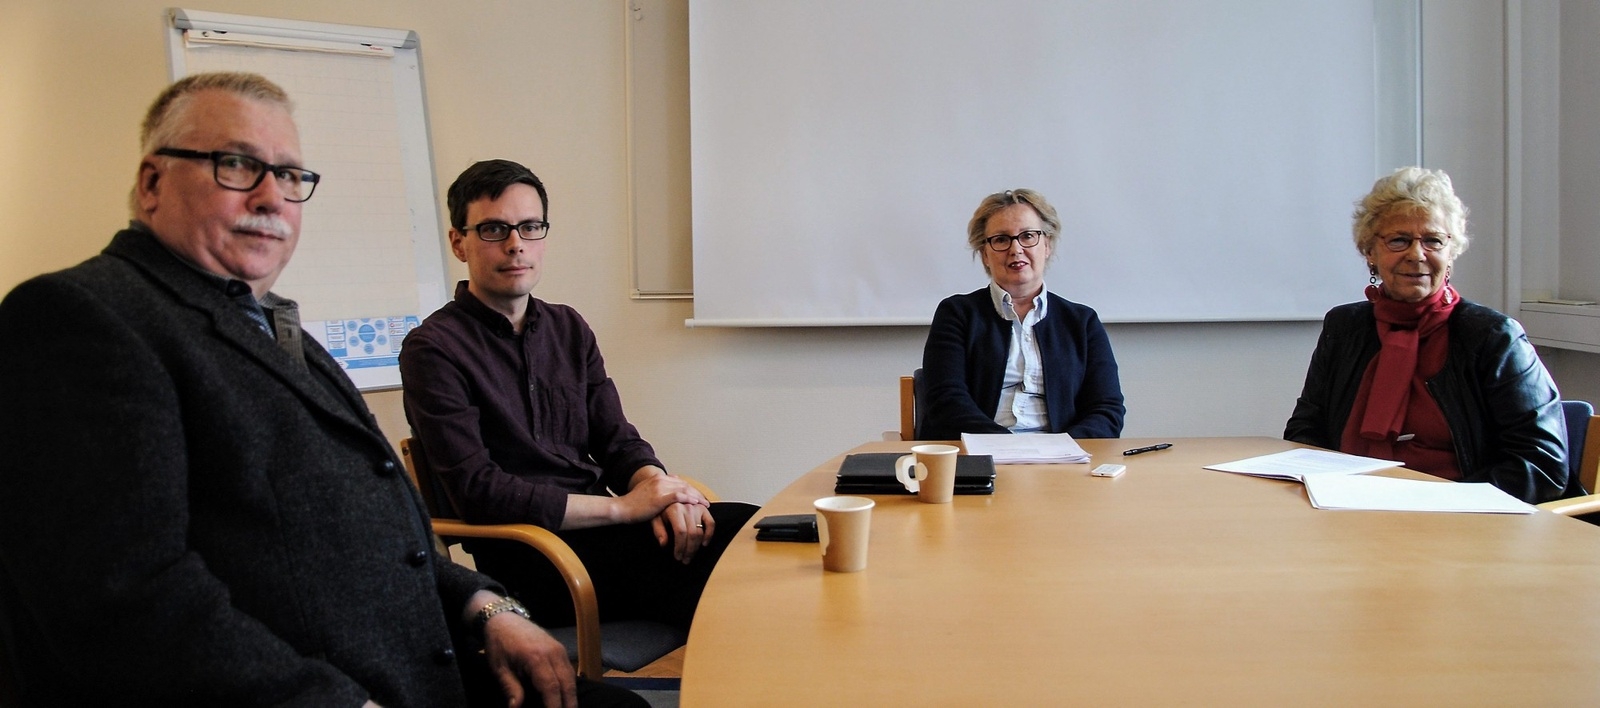 Rolf Streijffert (SD), Fredrik Hanell (MP), Susanne Andersson (M) och Maria Boström-Lambrén (S) under BUN:s pressträff på tisdagen.